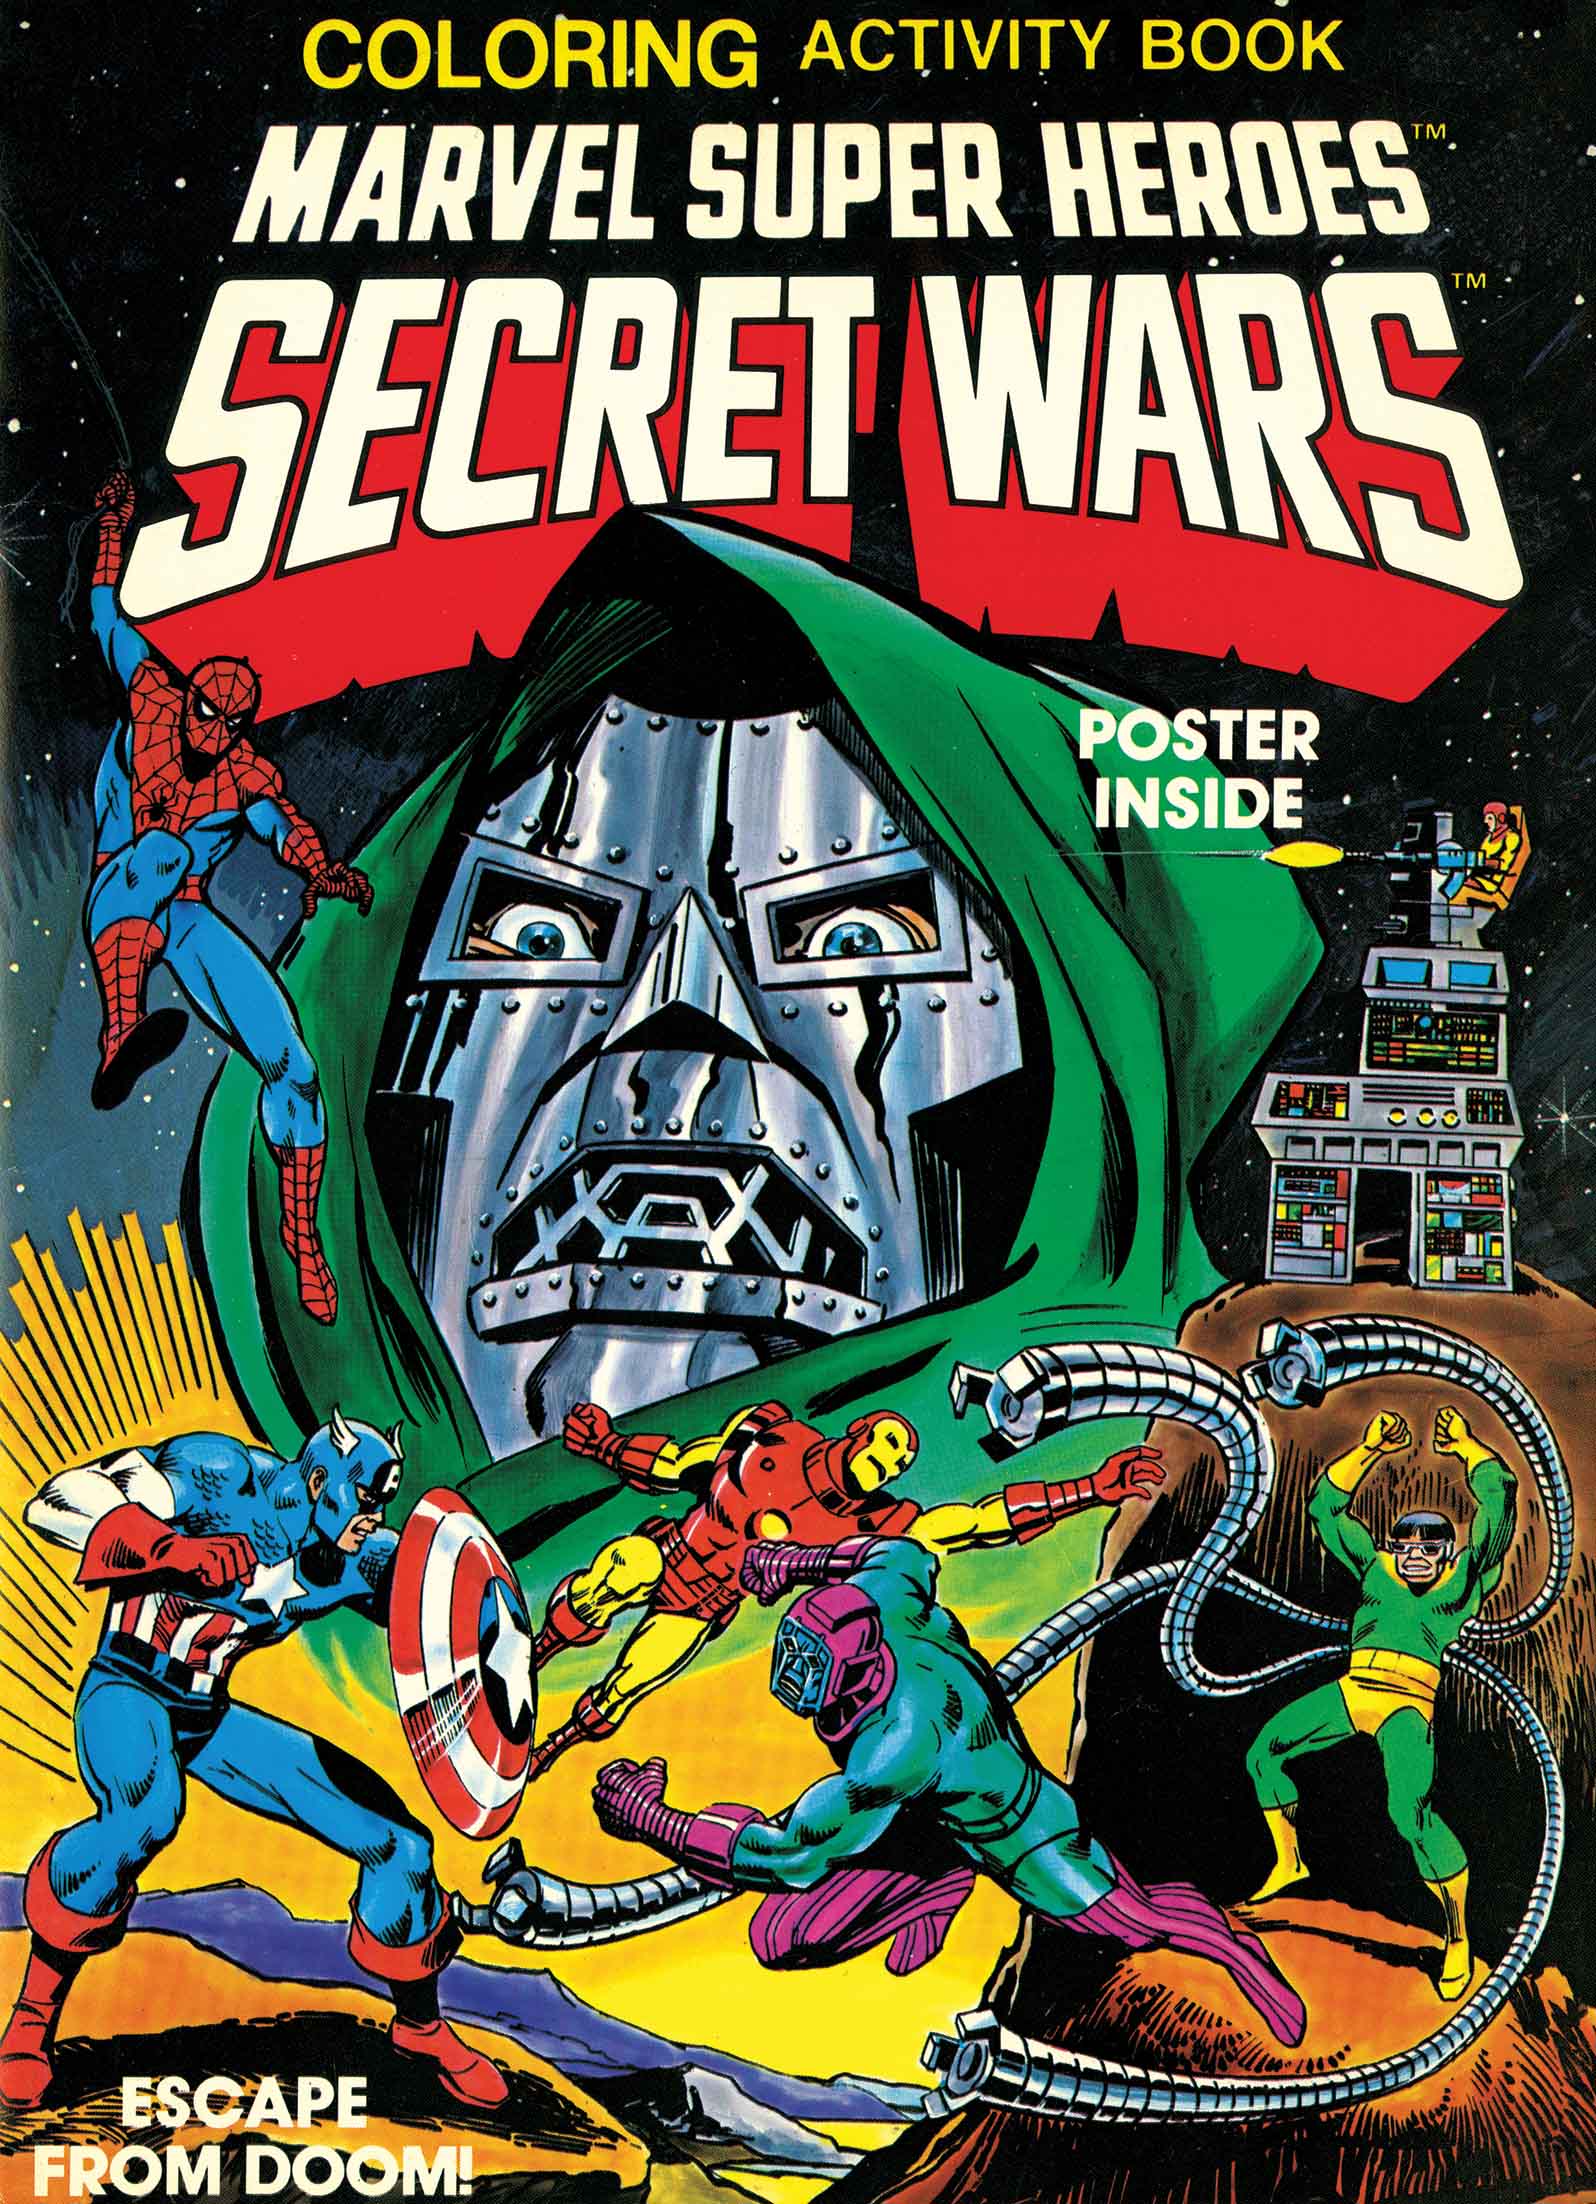 activity book, comic news, marvel, secret wars